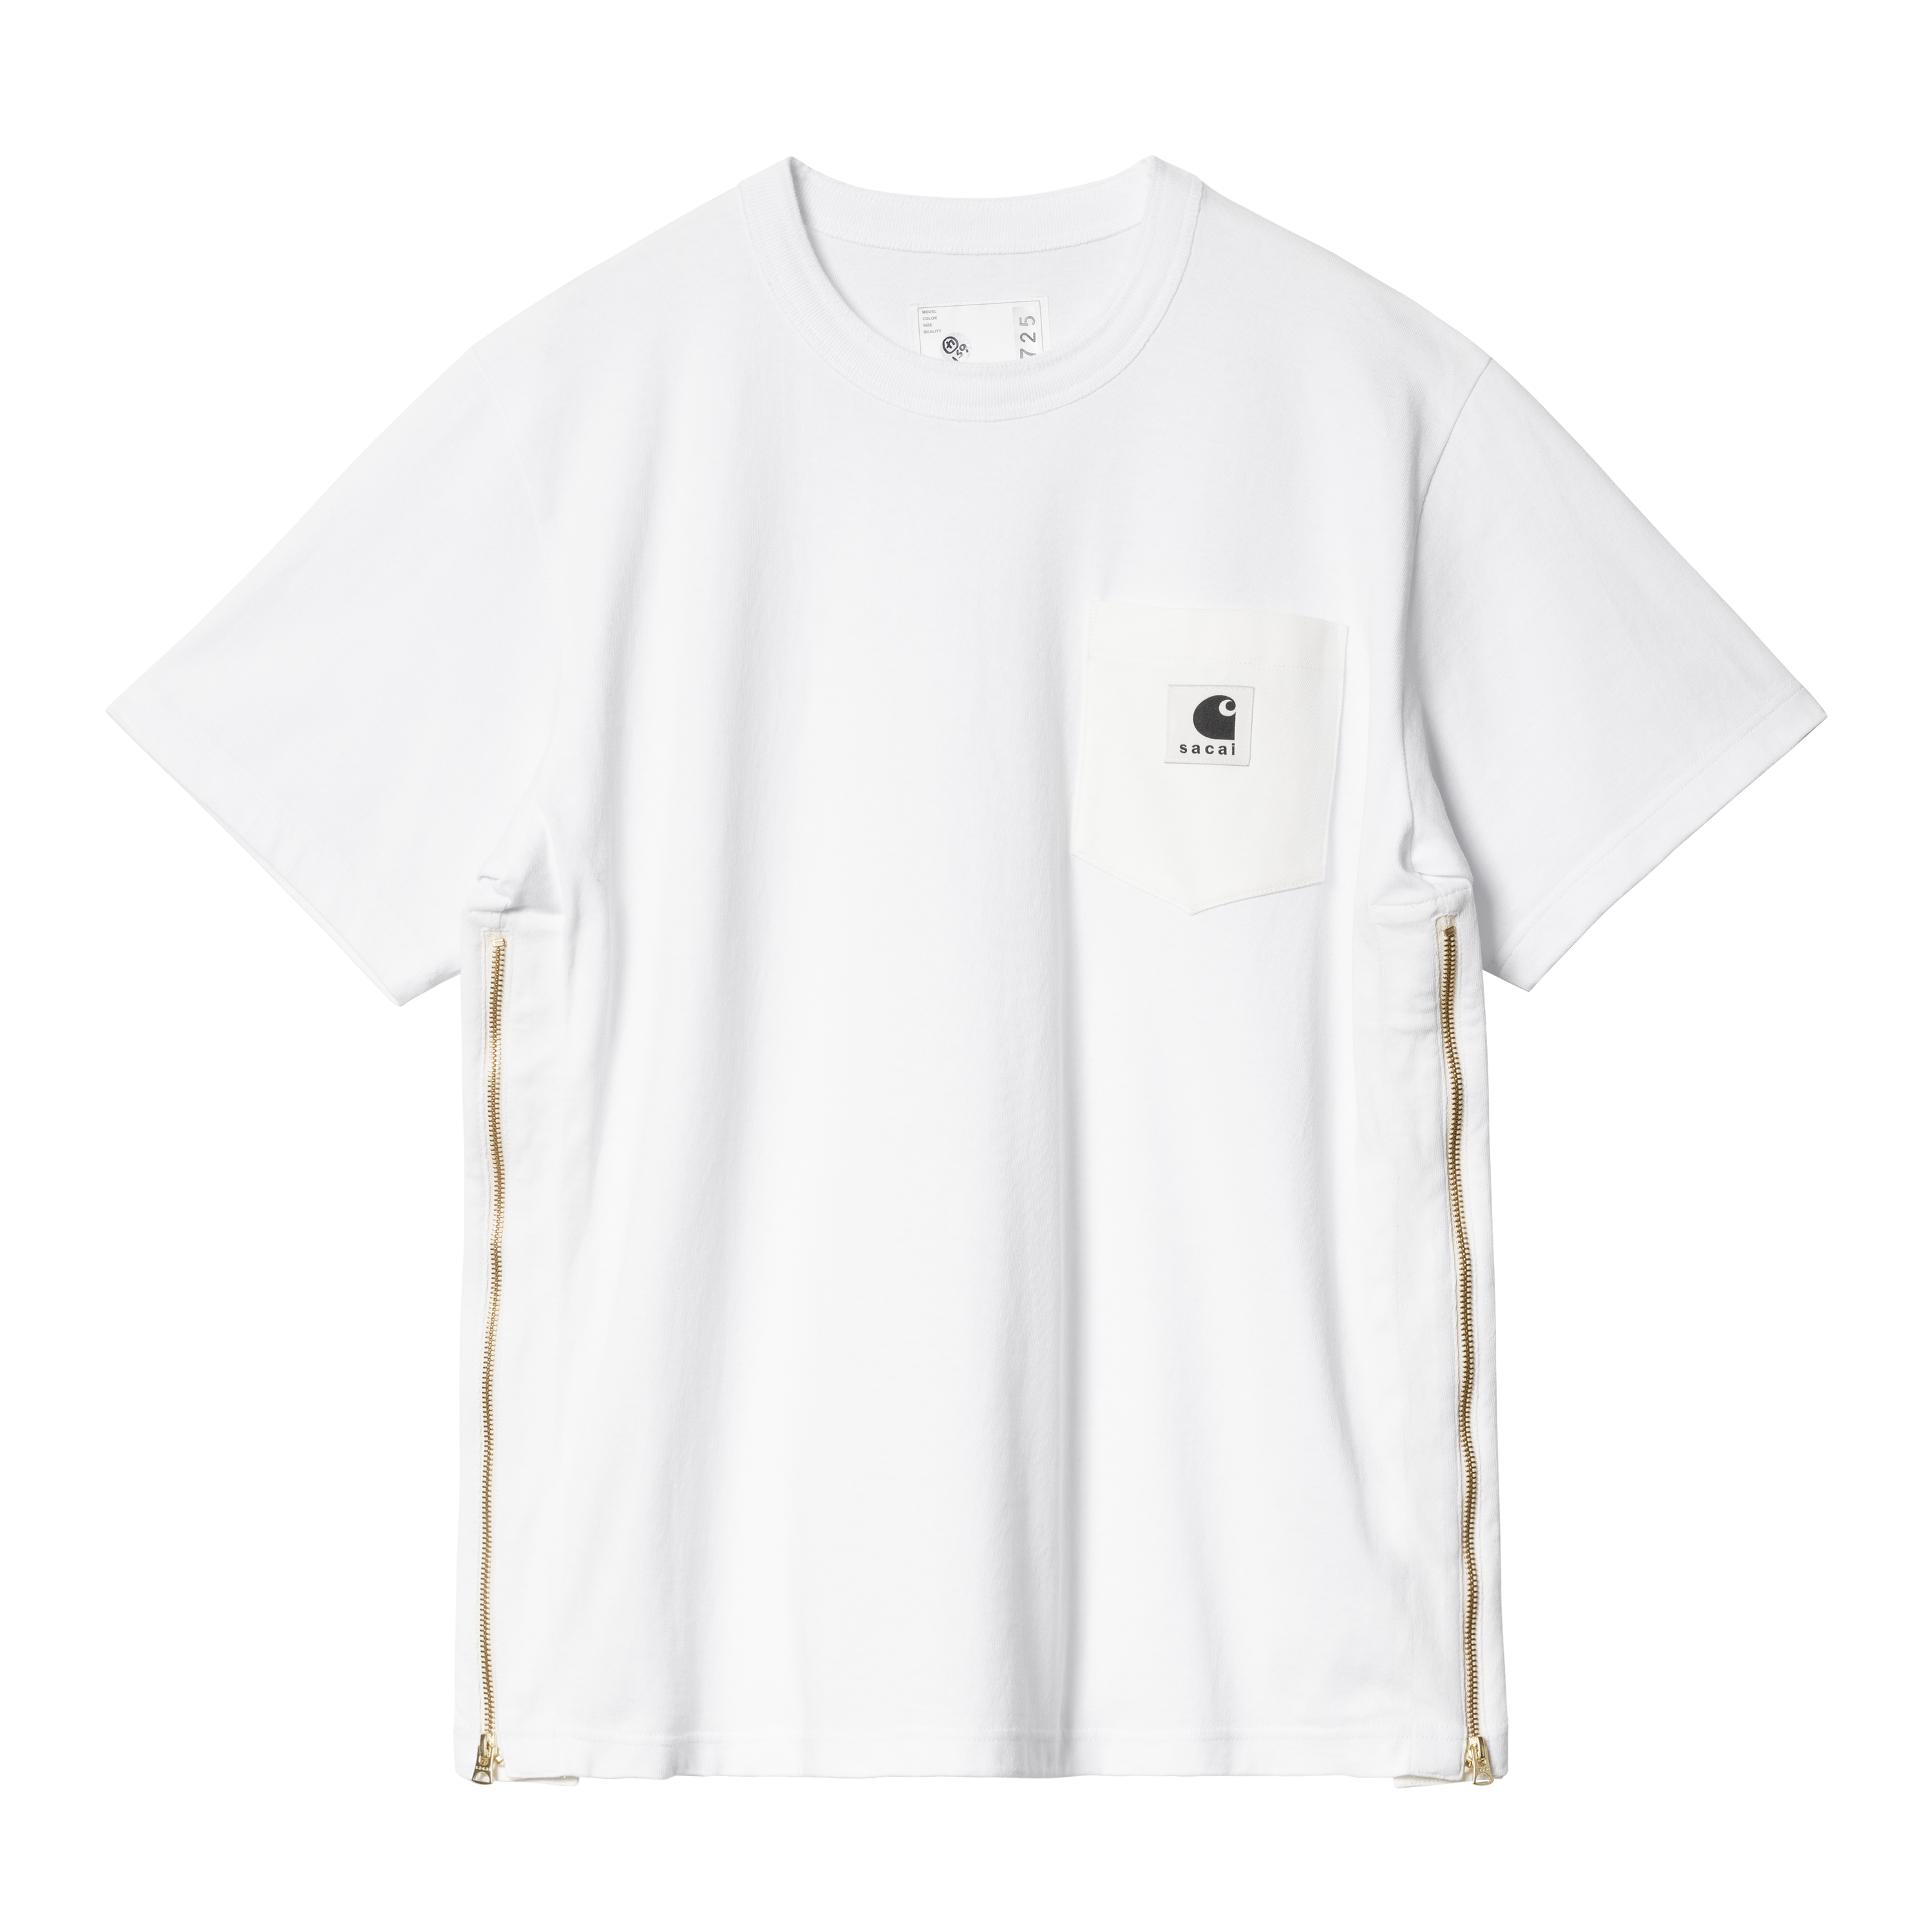 Sacai Carhartt WIP T-Shirt サカイカーハート 白 5異なる2つのCa